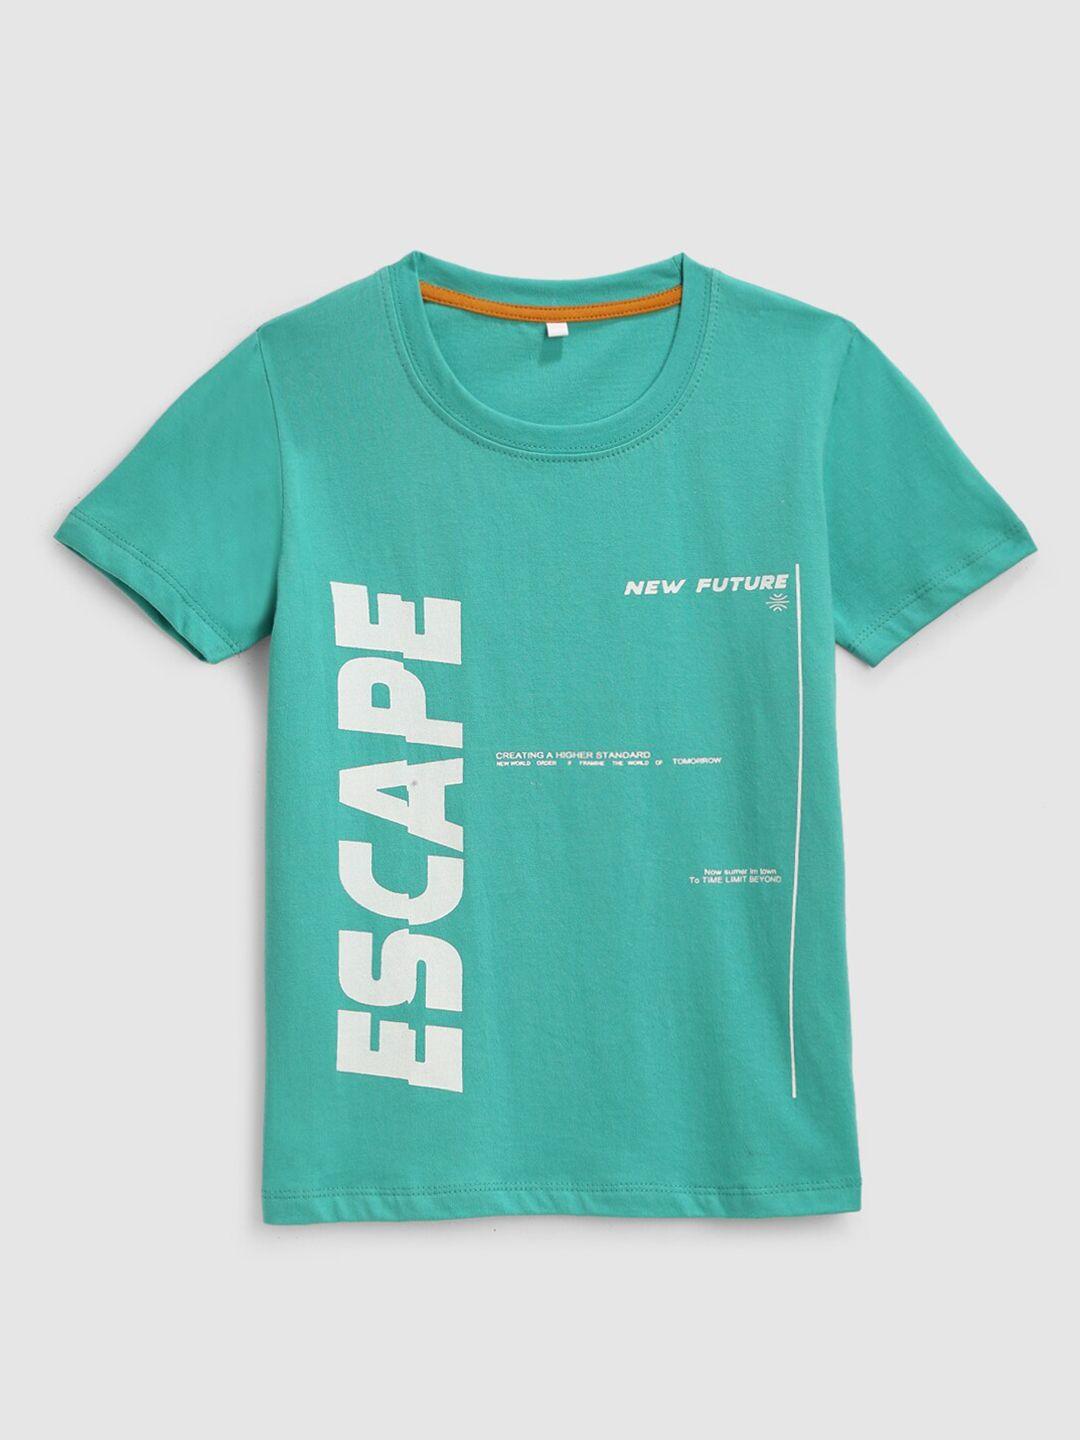 yk boys teal green typography printed cotton running t-shirt